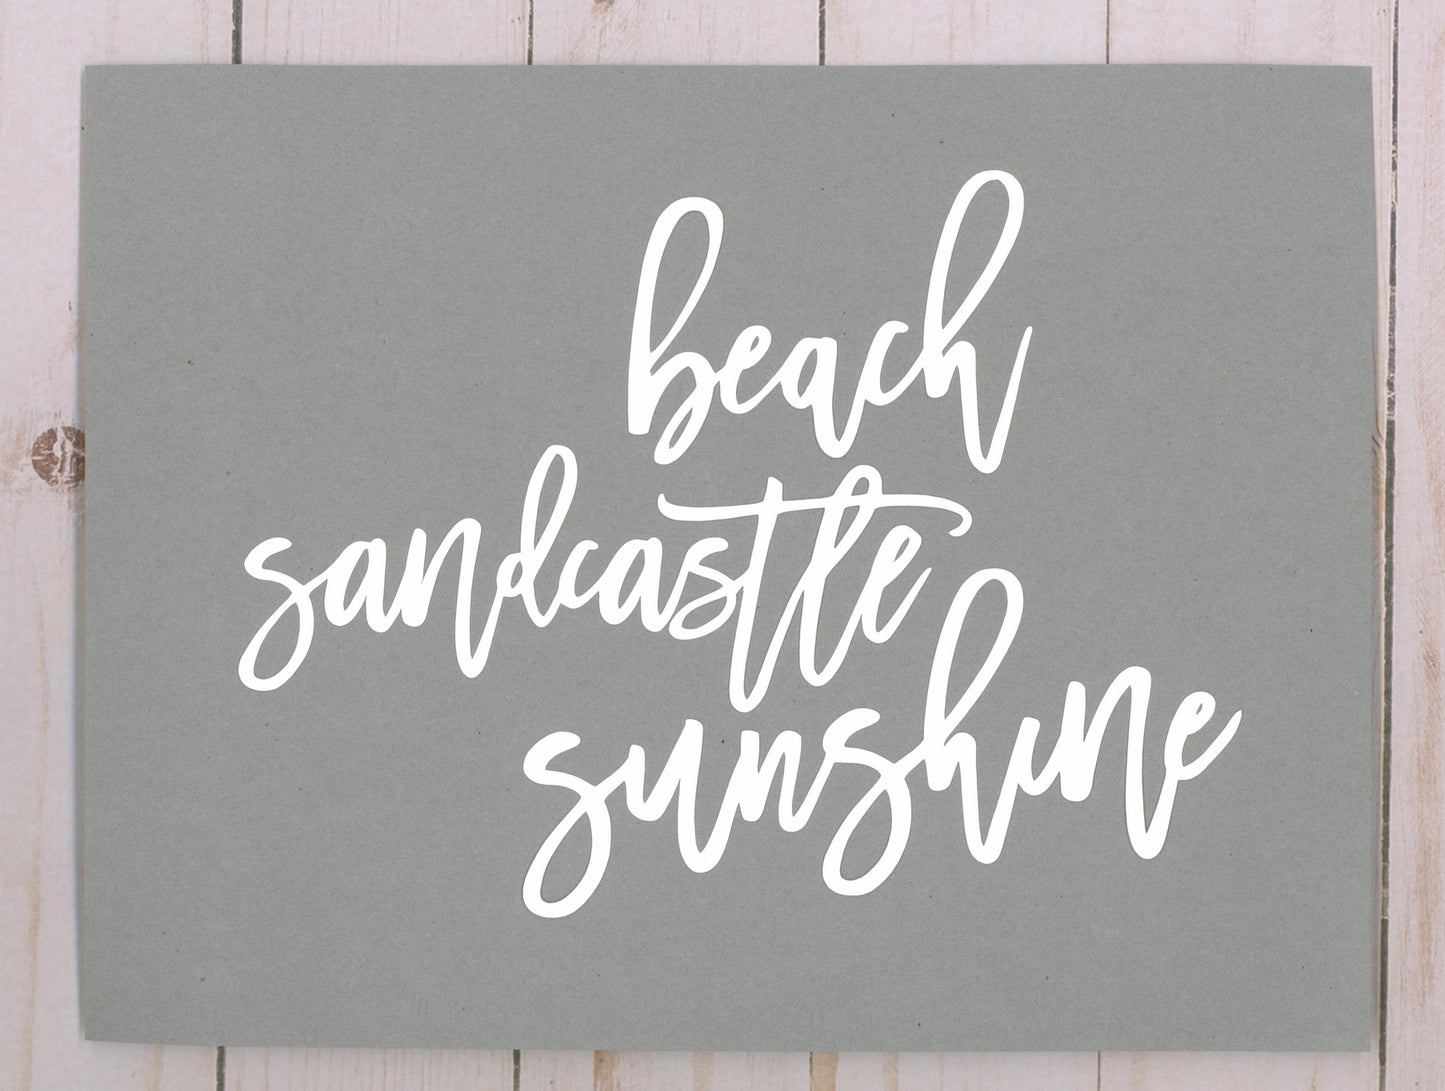 "Beach, Sandcastle, Sunshine" Cardstock Cut